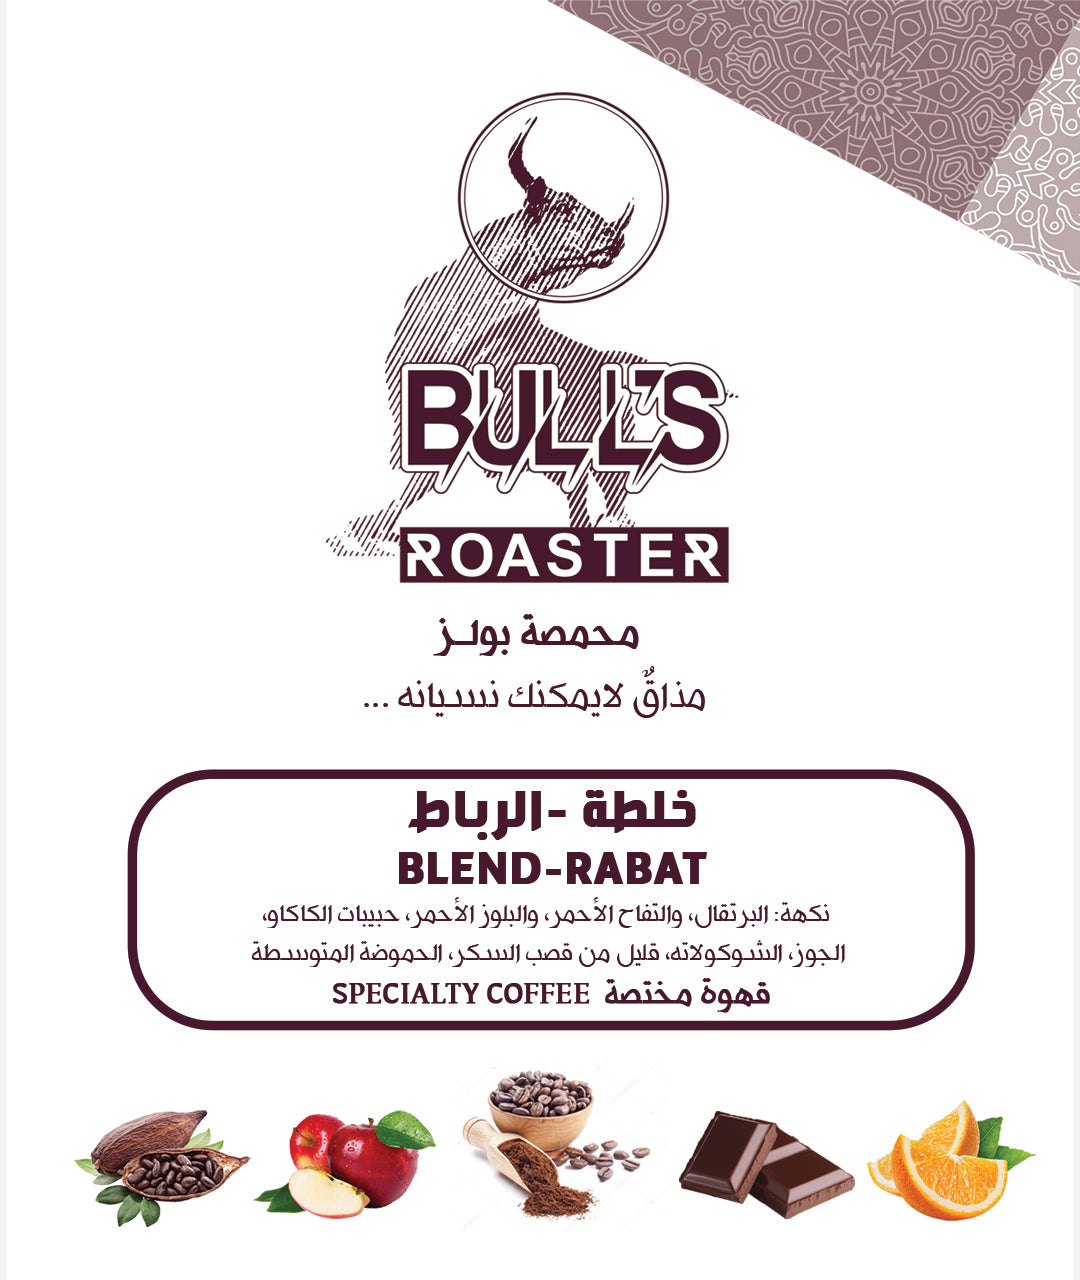 Al Rabat specialty coffee - Bull's Roastery